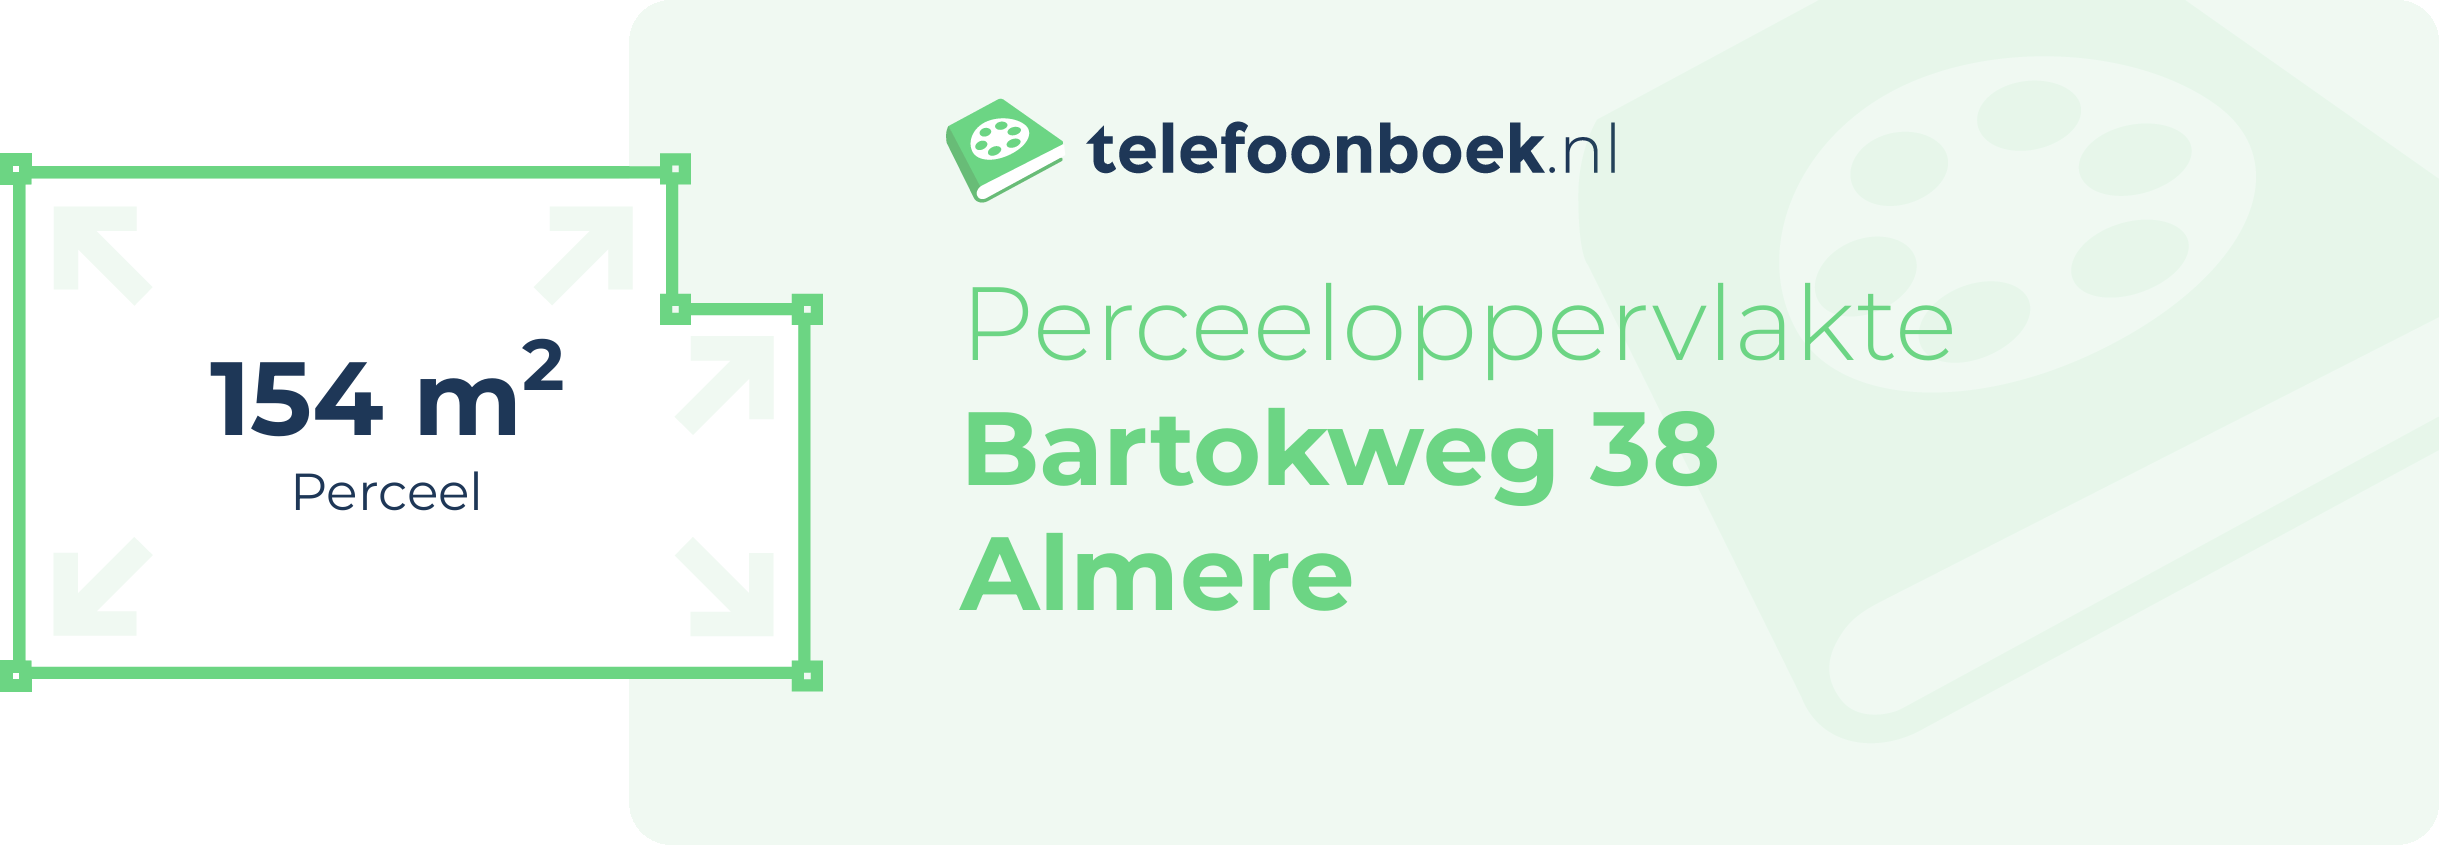 Perceeloppervlakte Bartokweg 38 Almere